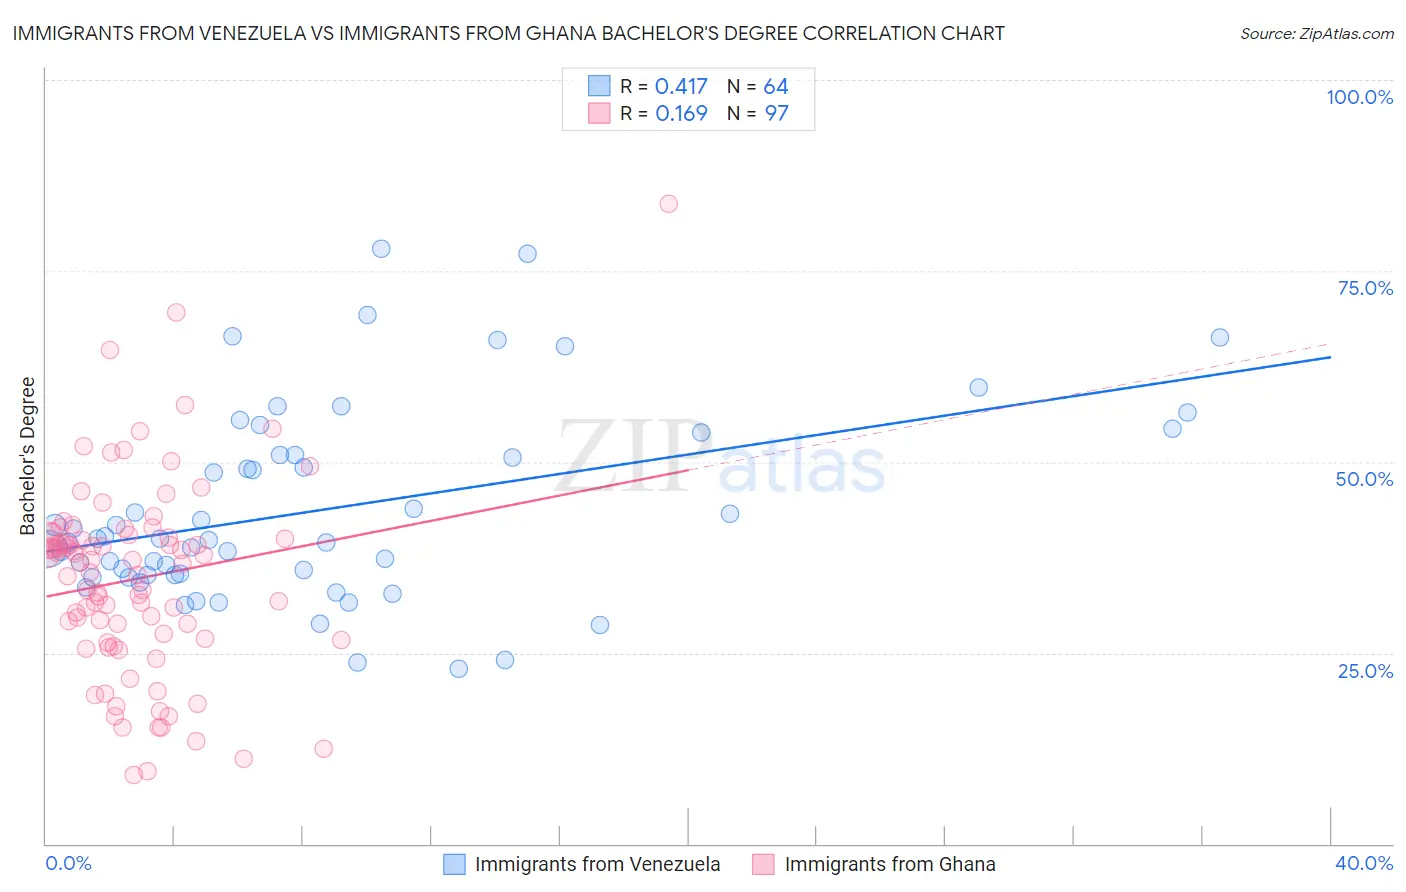 Immigrants from Venezuela vs Immigrants from Ghana Bachelor's Degree